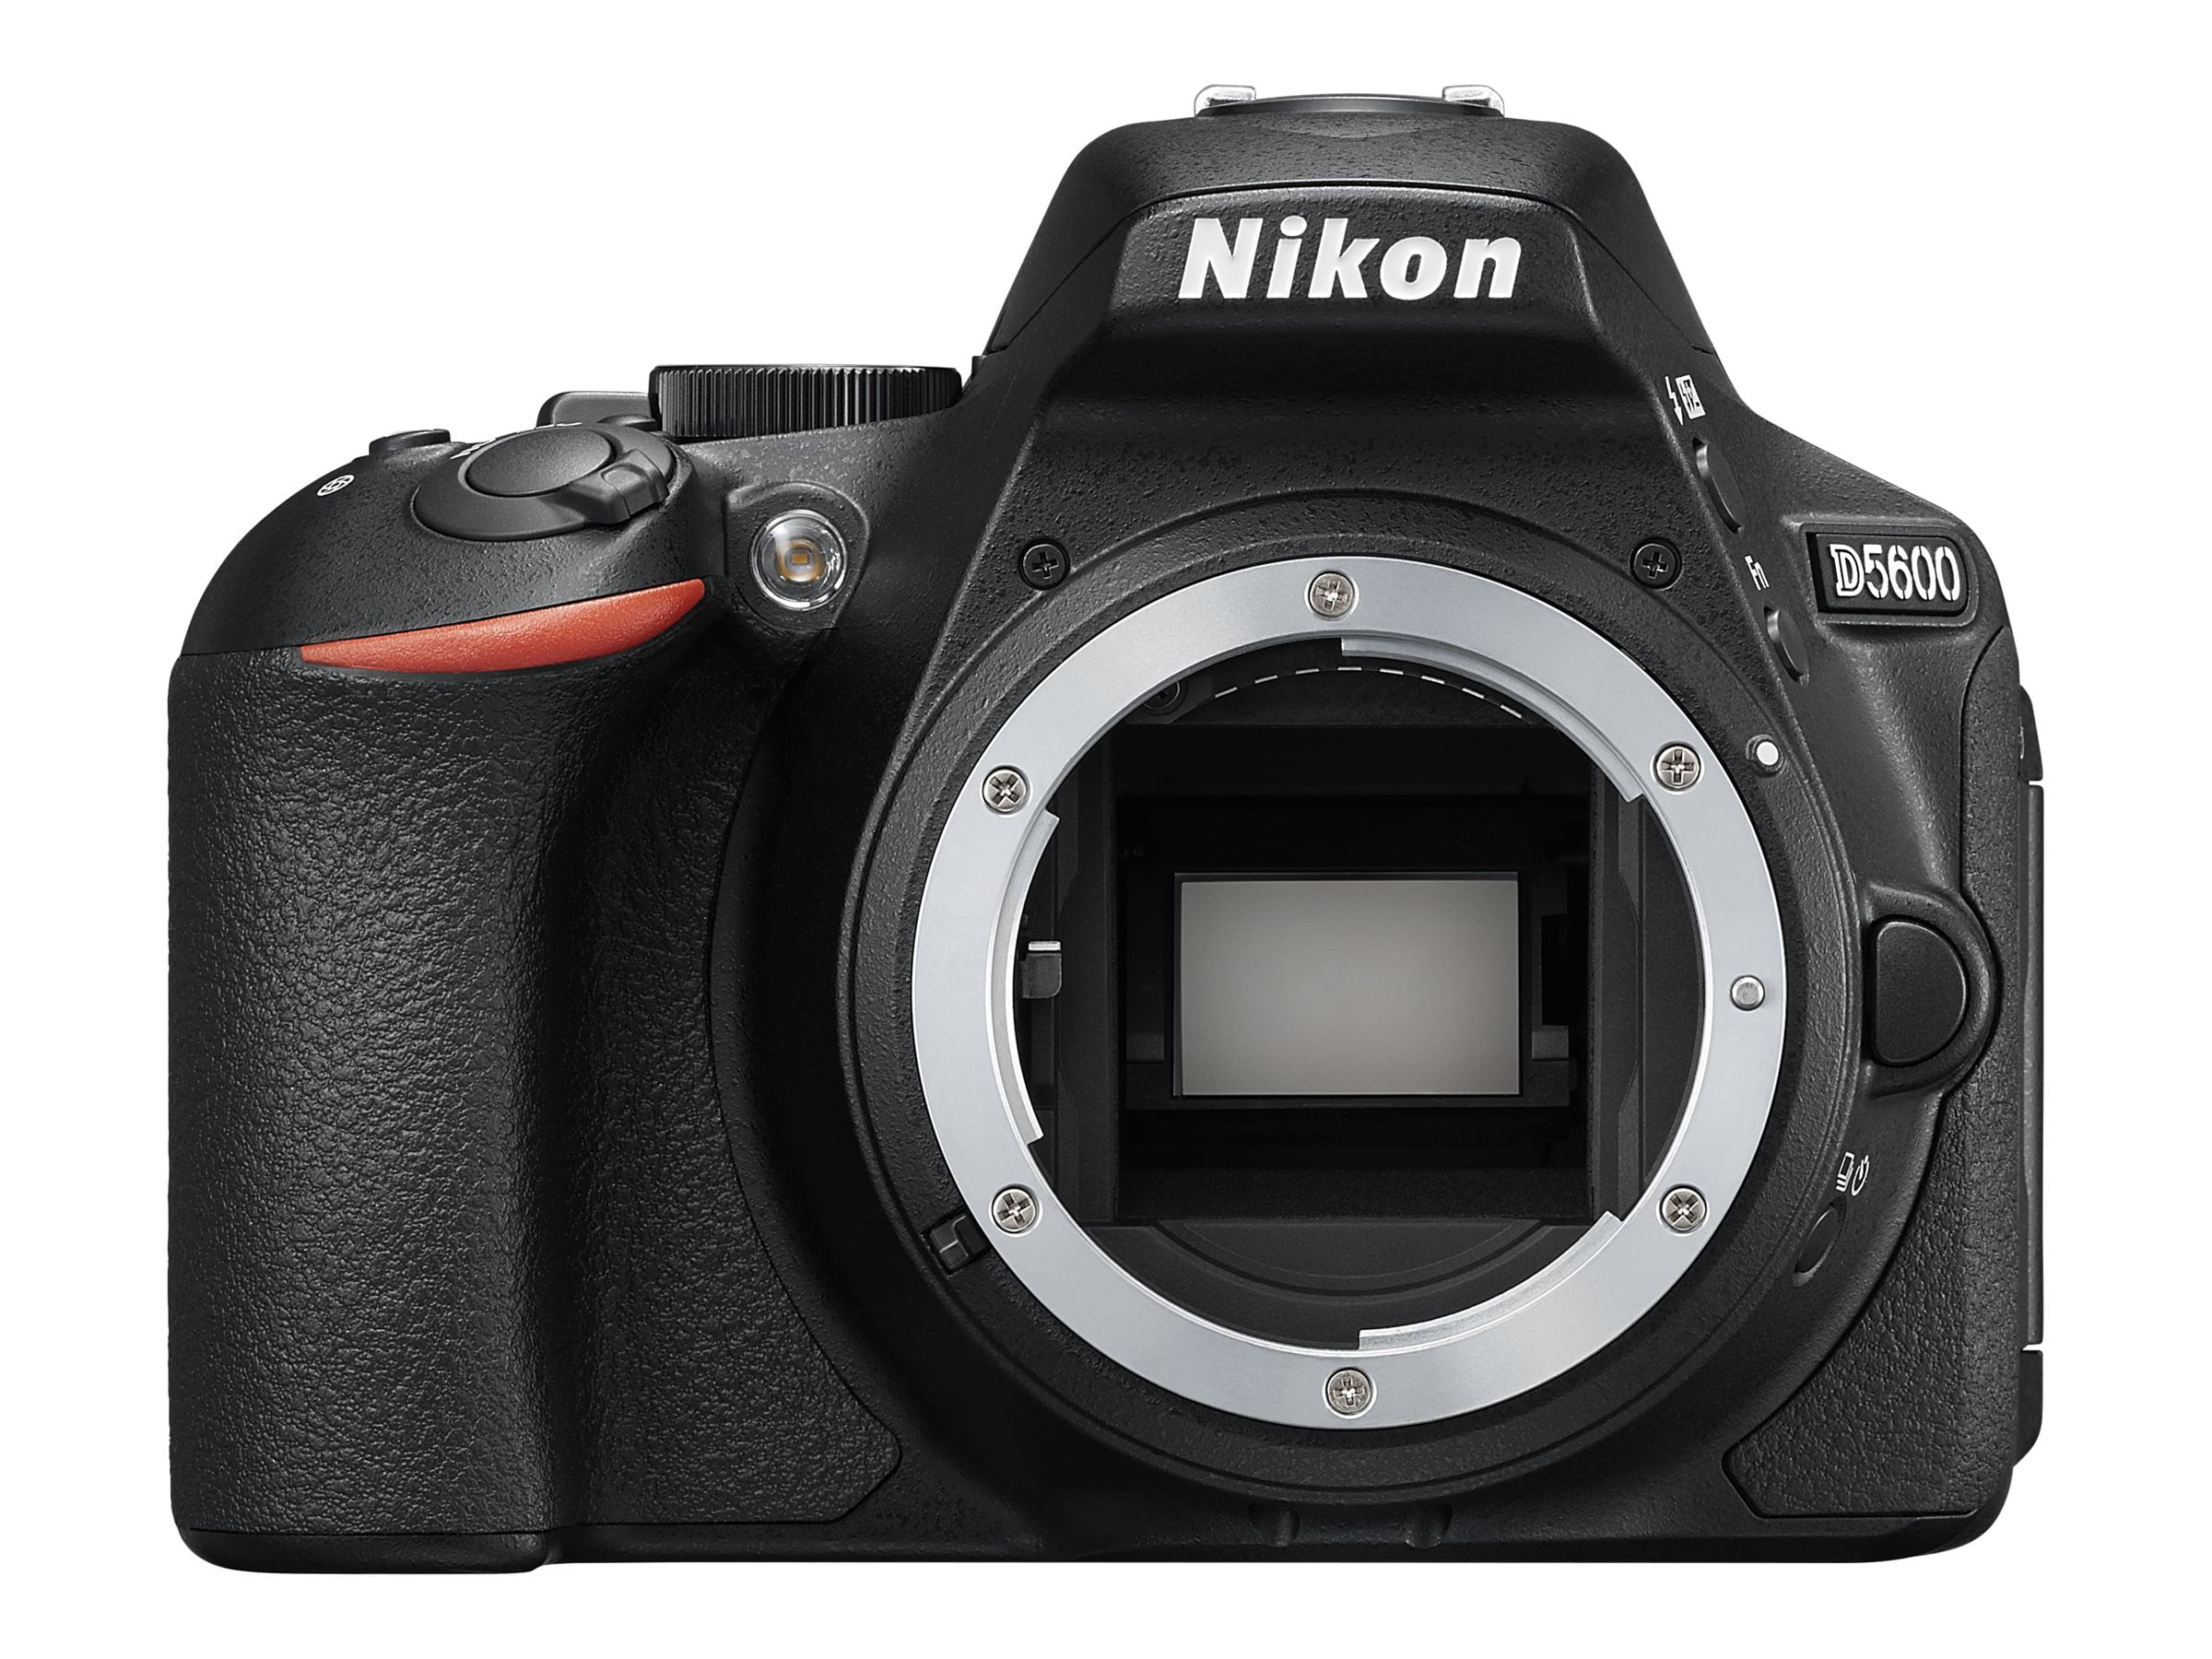 Nikon D5600 - Digital camera - SLR - 24.2 MP - APS-C - 1080p / 60 fps